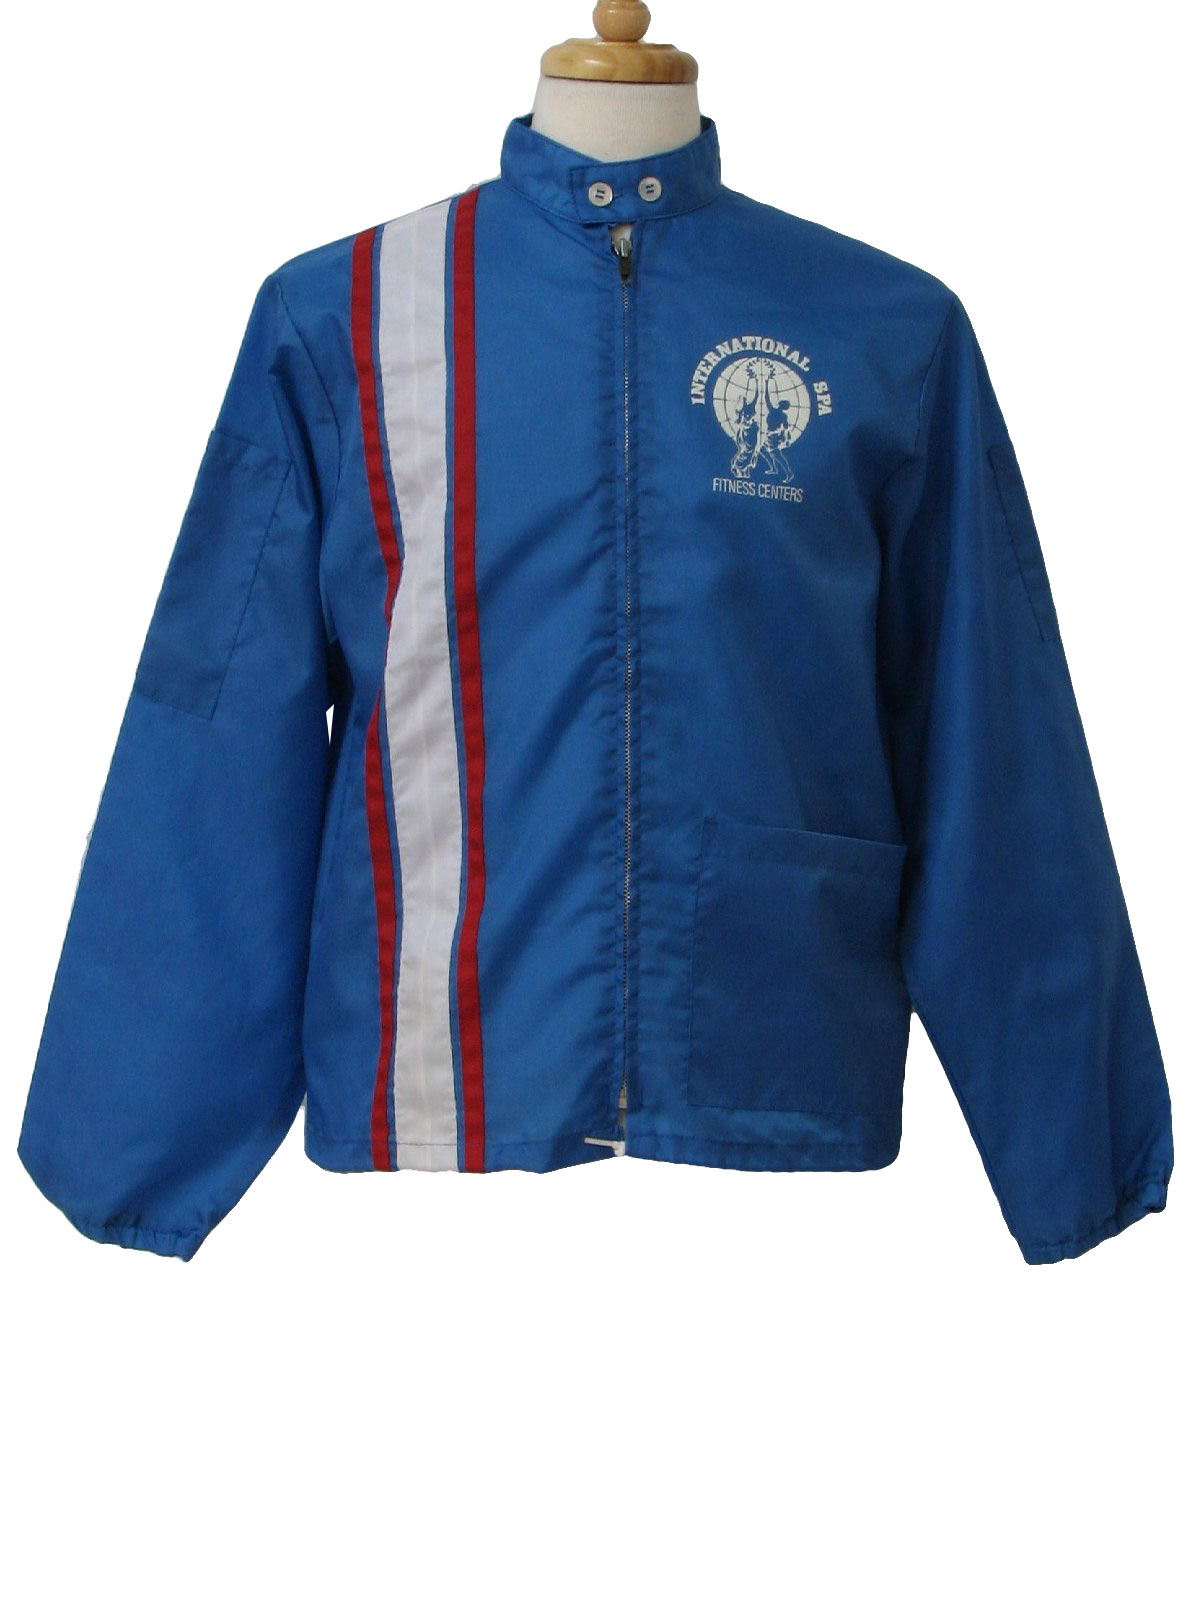 Pla Jac 80's Vintage Jacket: 80s -Pla Jac- Mens slate blue , white and ...